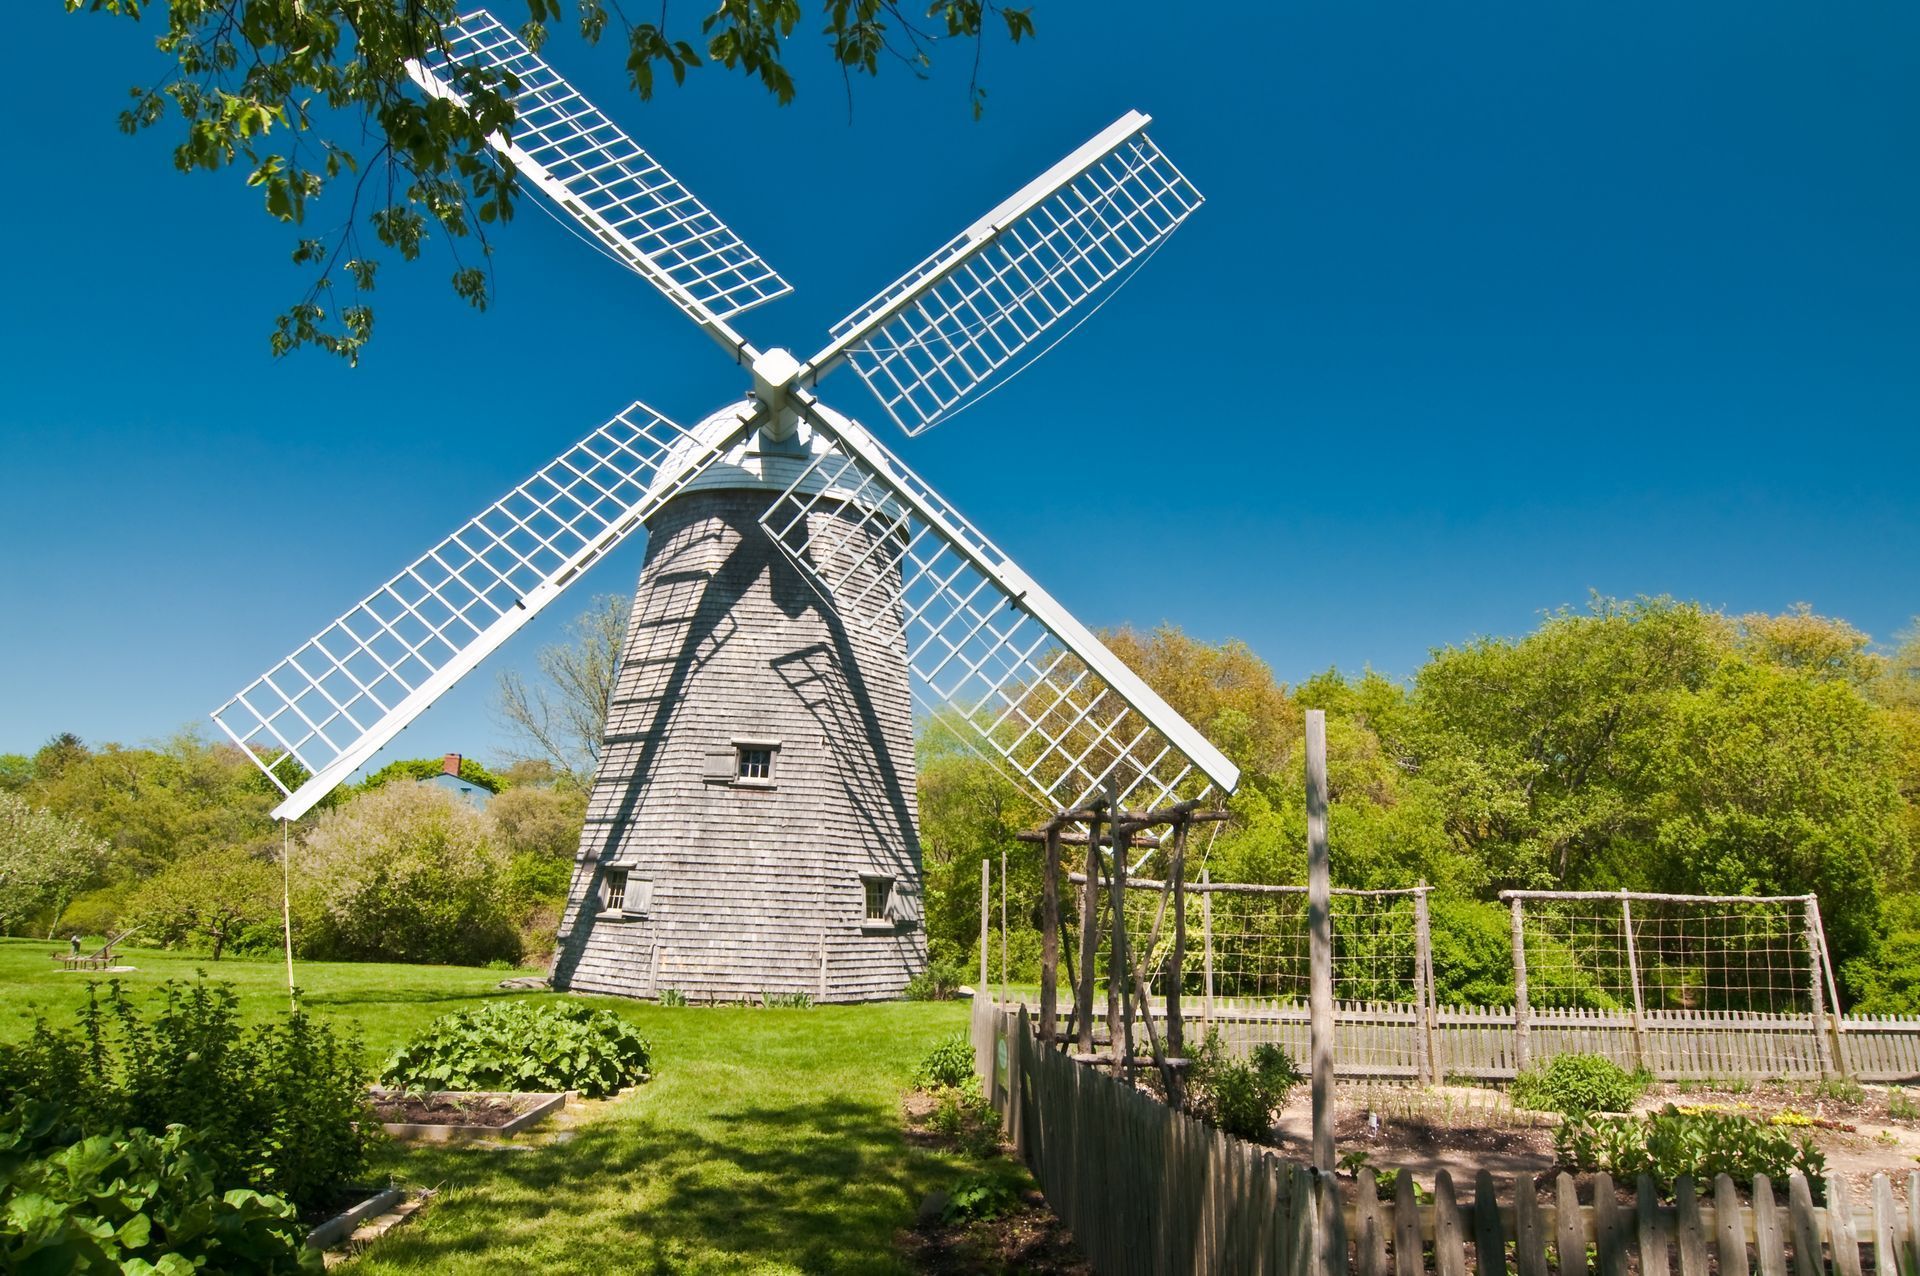 Boyd's Wind Grist Mill - Middletown RI